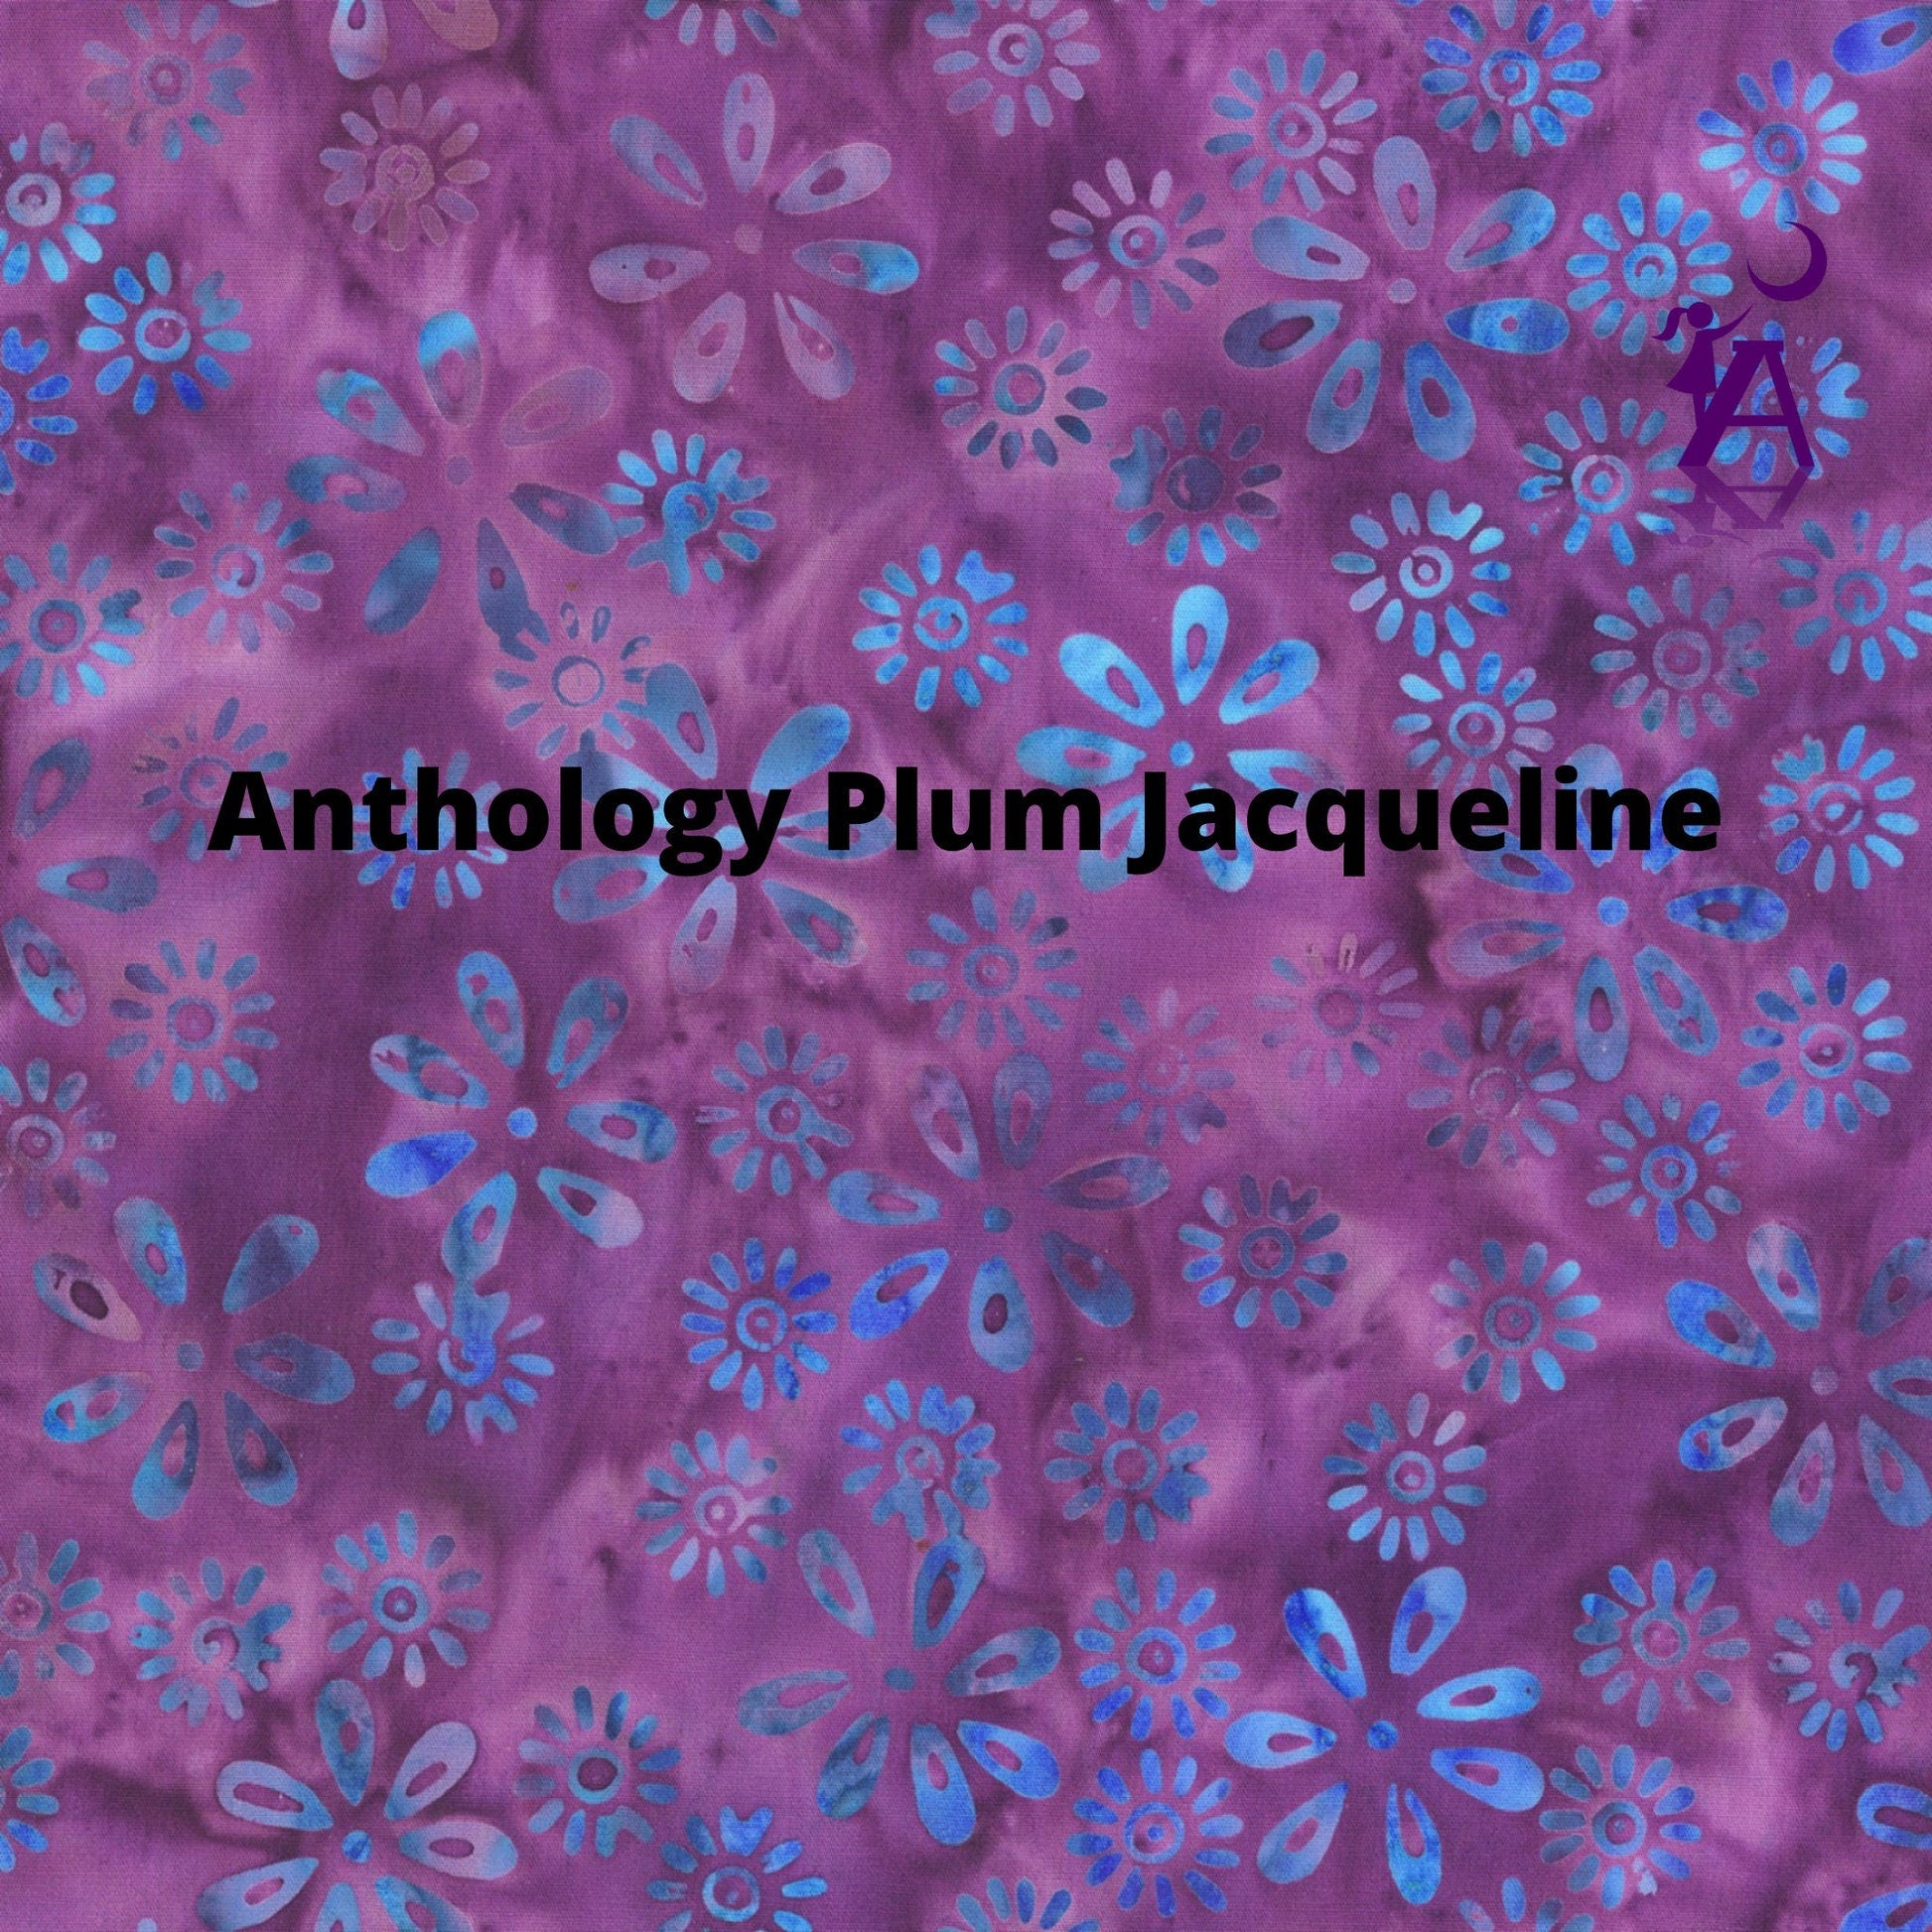 Robert Kaufman Fabric 1 yard (36"x44") / Purple Batik prints by Anthology Plum Jacqueline & Robert Kaufman Green Water batik cotton fabric